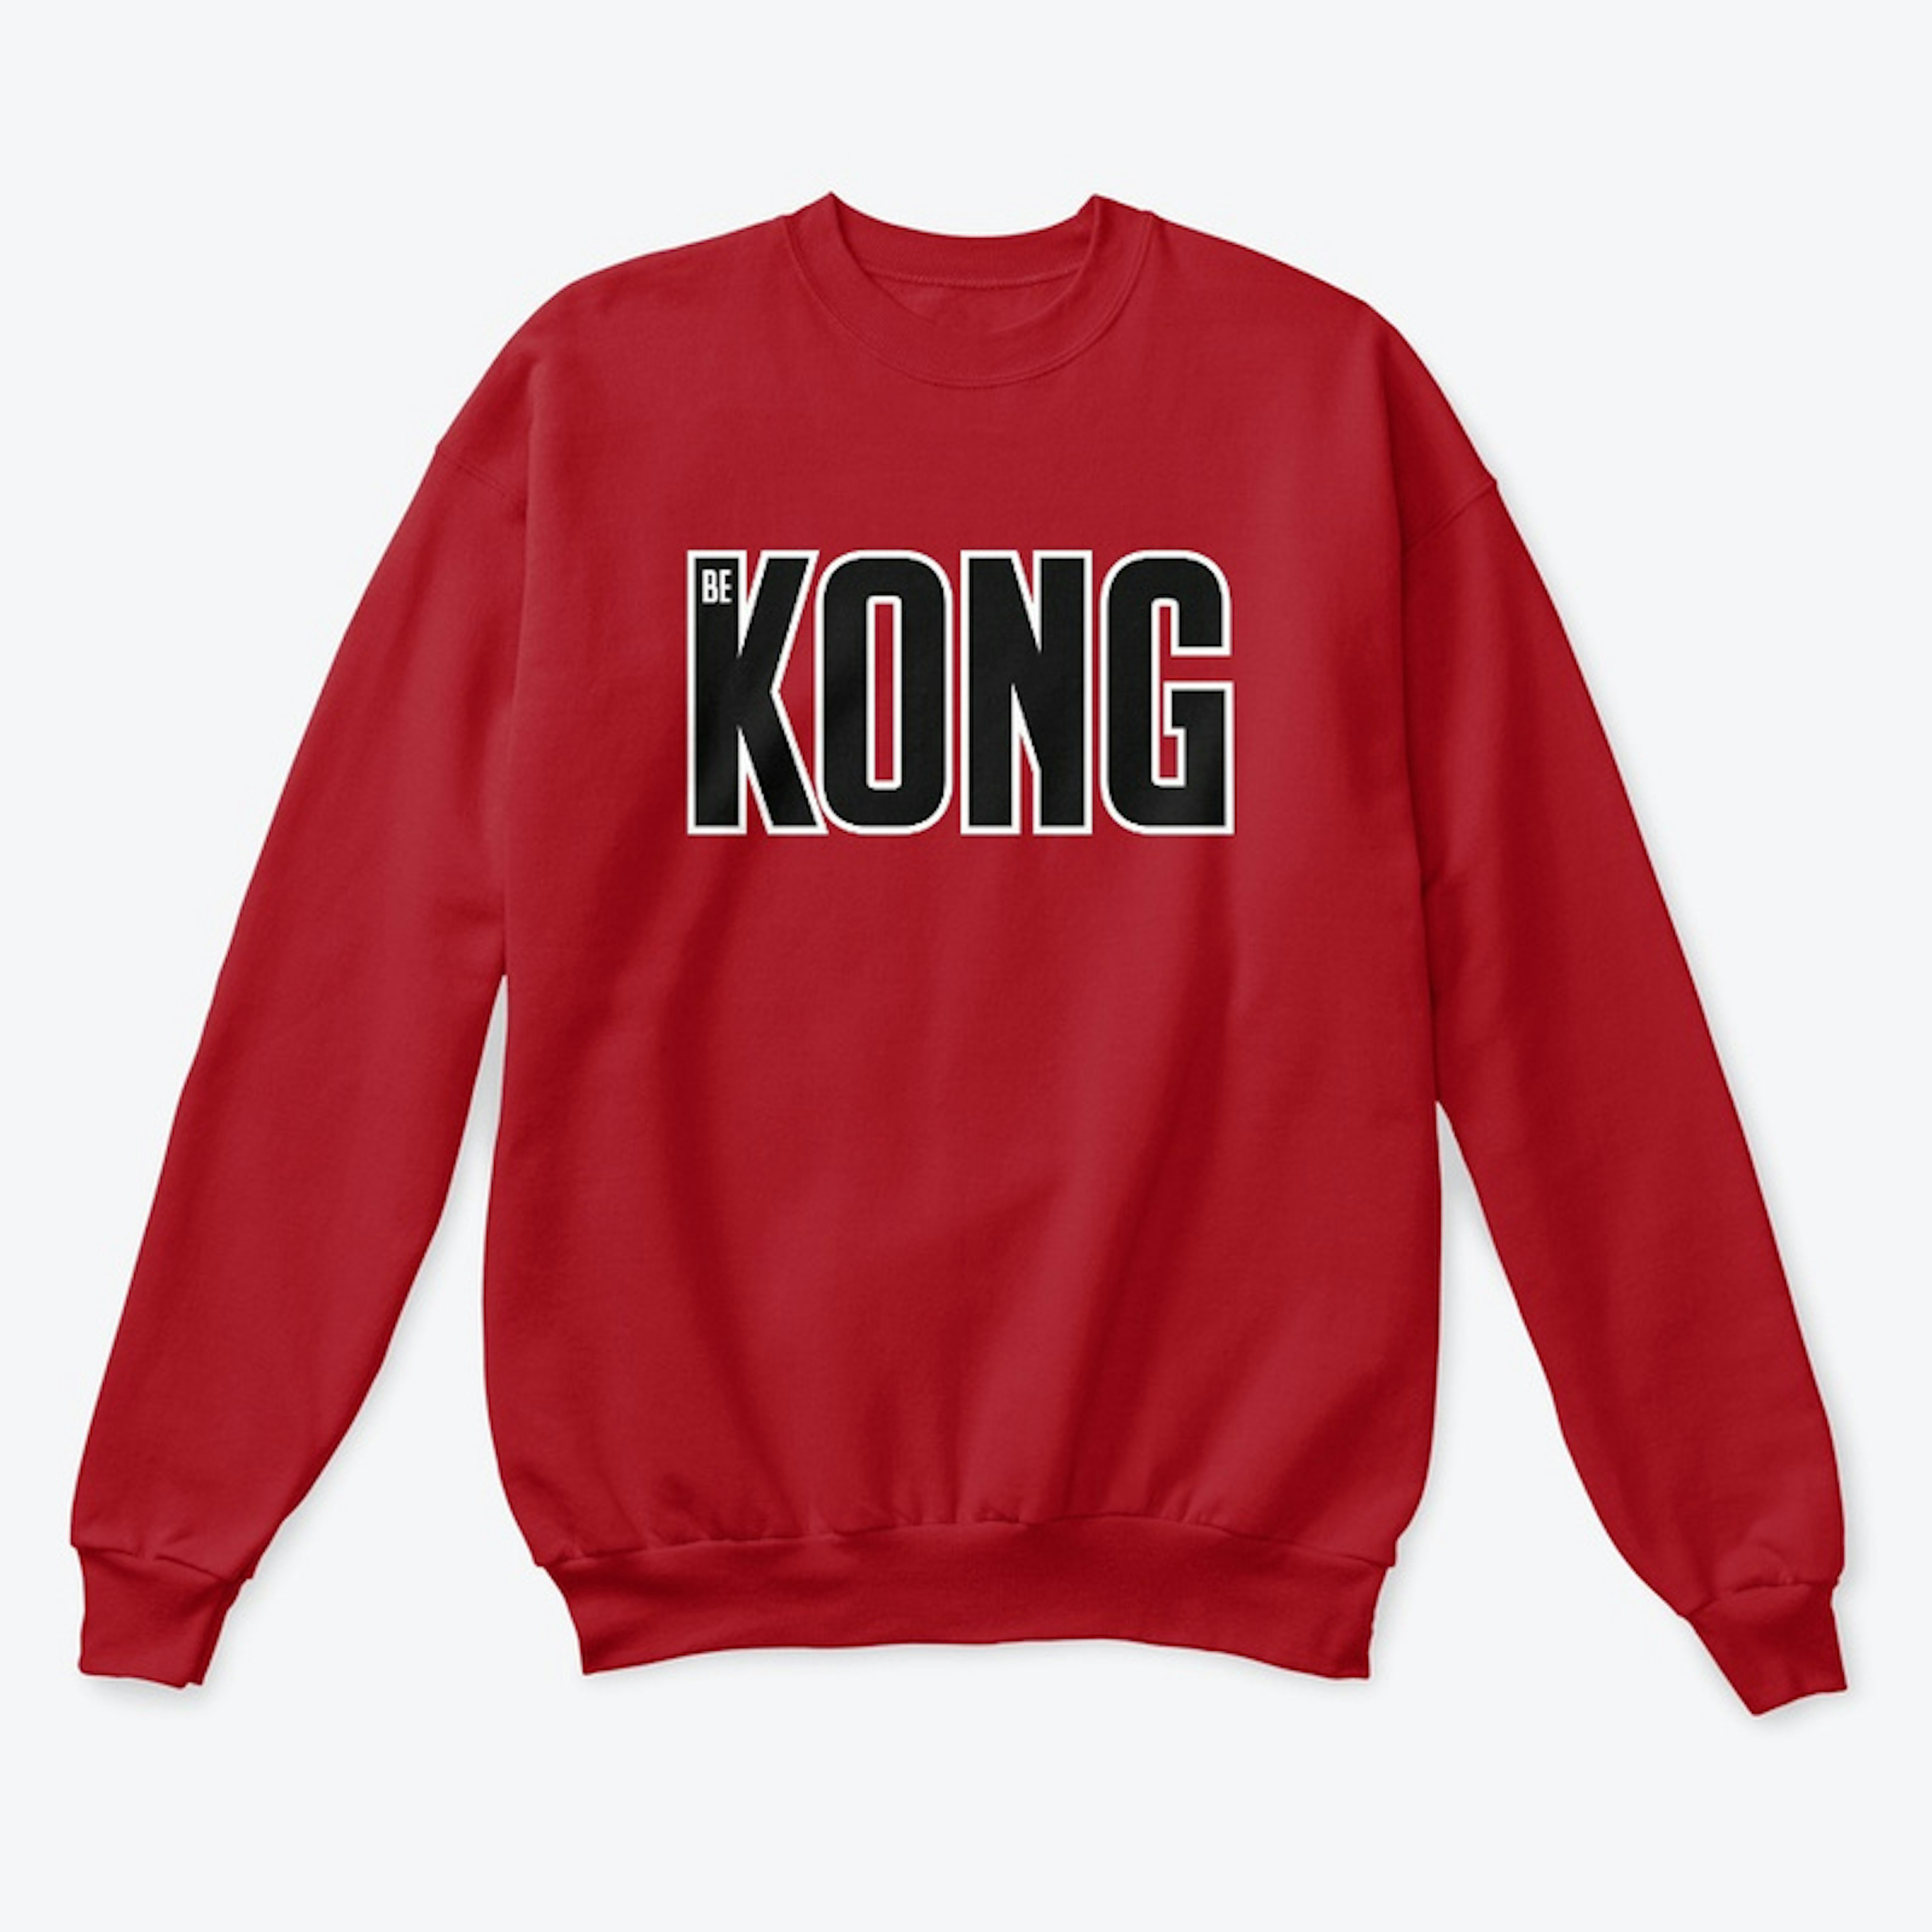 Be Kong Black Print Sweatshirt